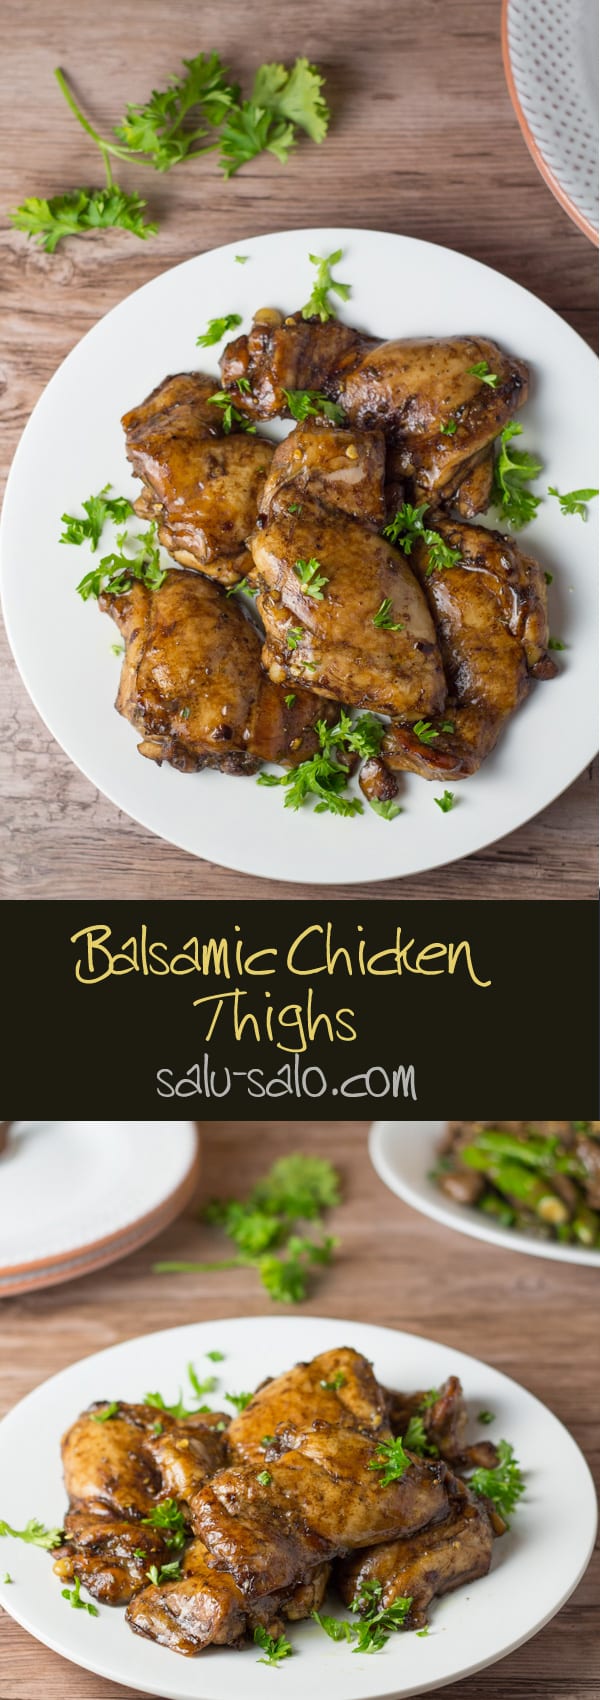 Balsamic Chicken Thighs